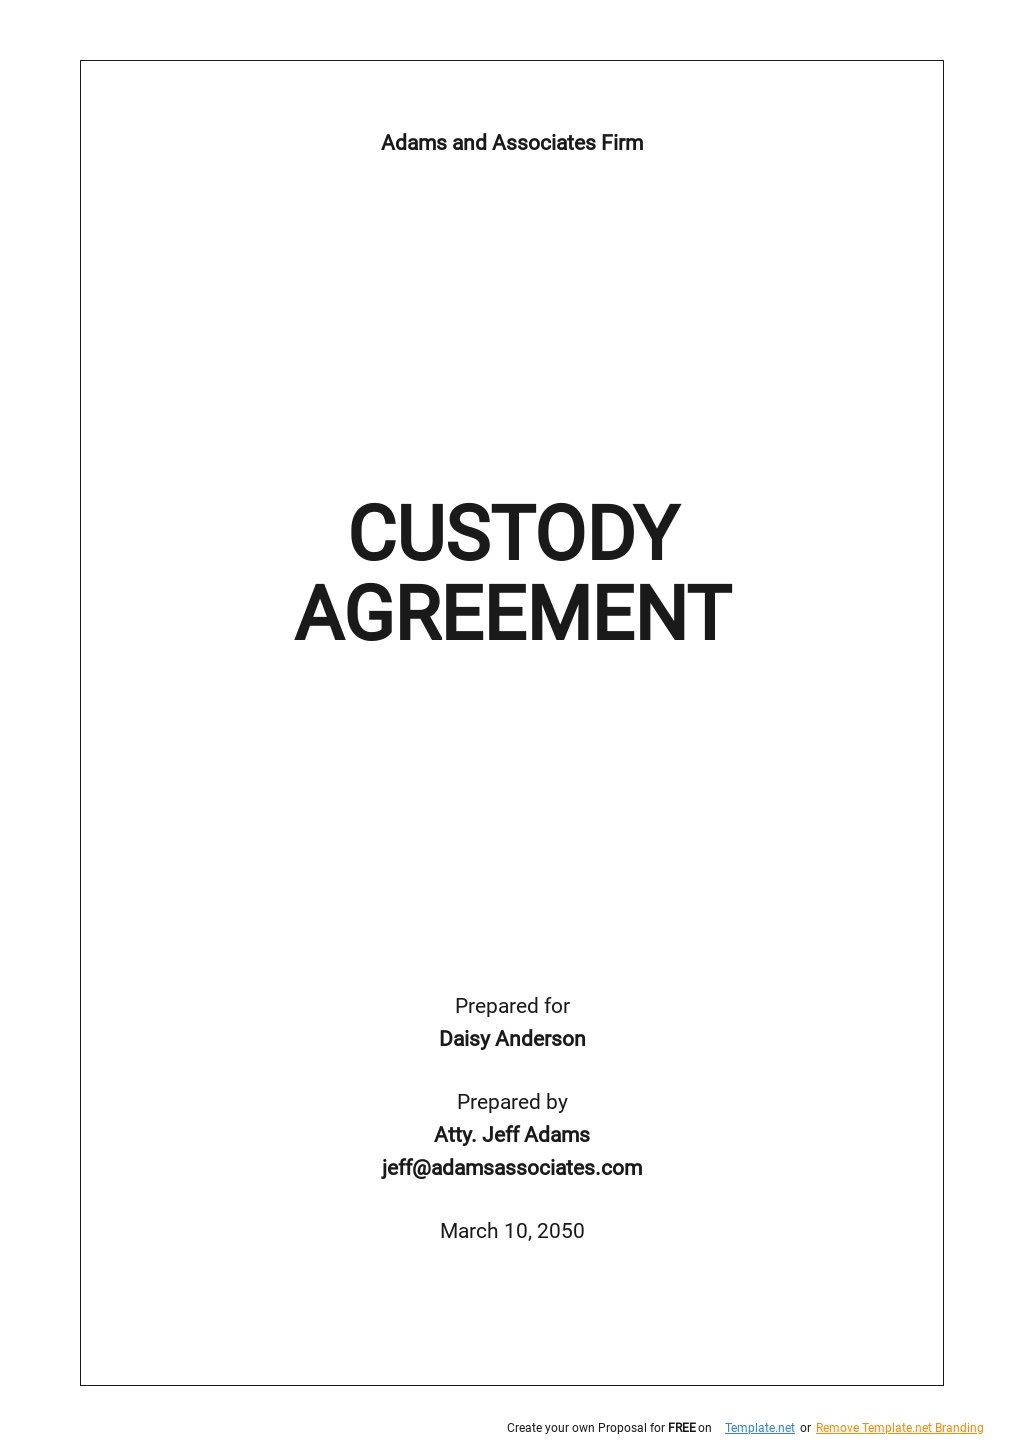 Child Custody Agreement Templates 7+ Docs, Free Downloads